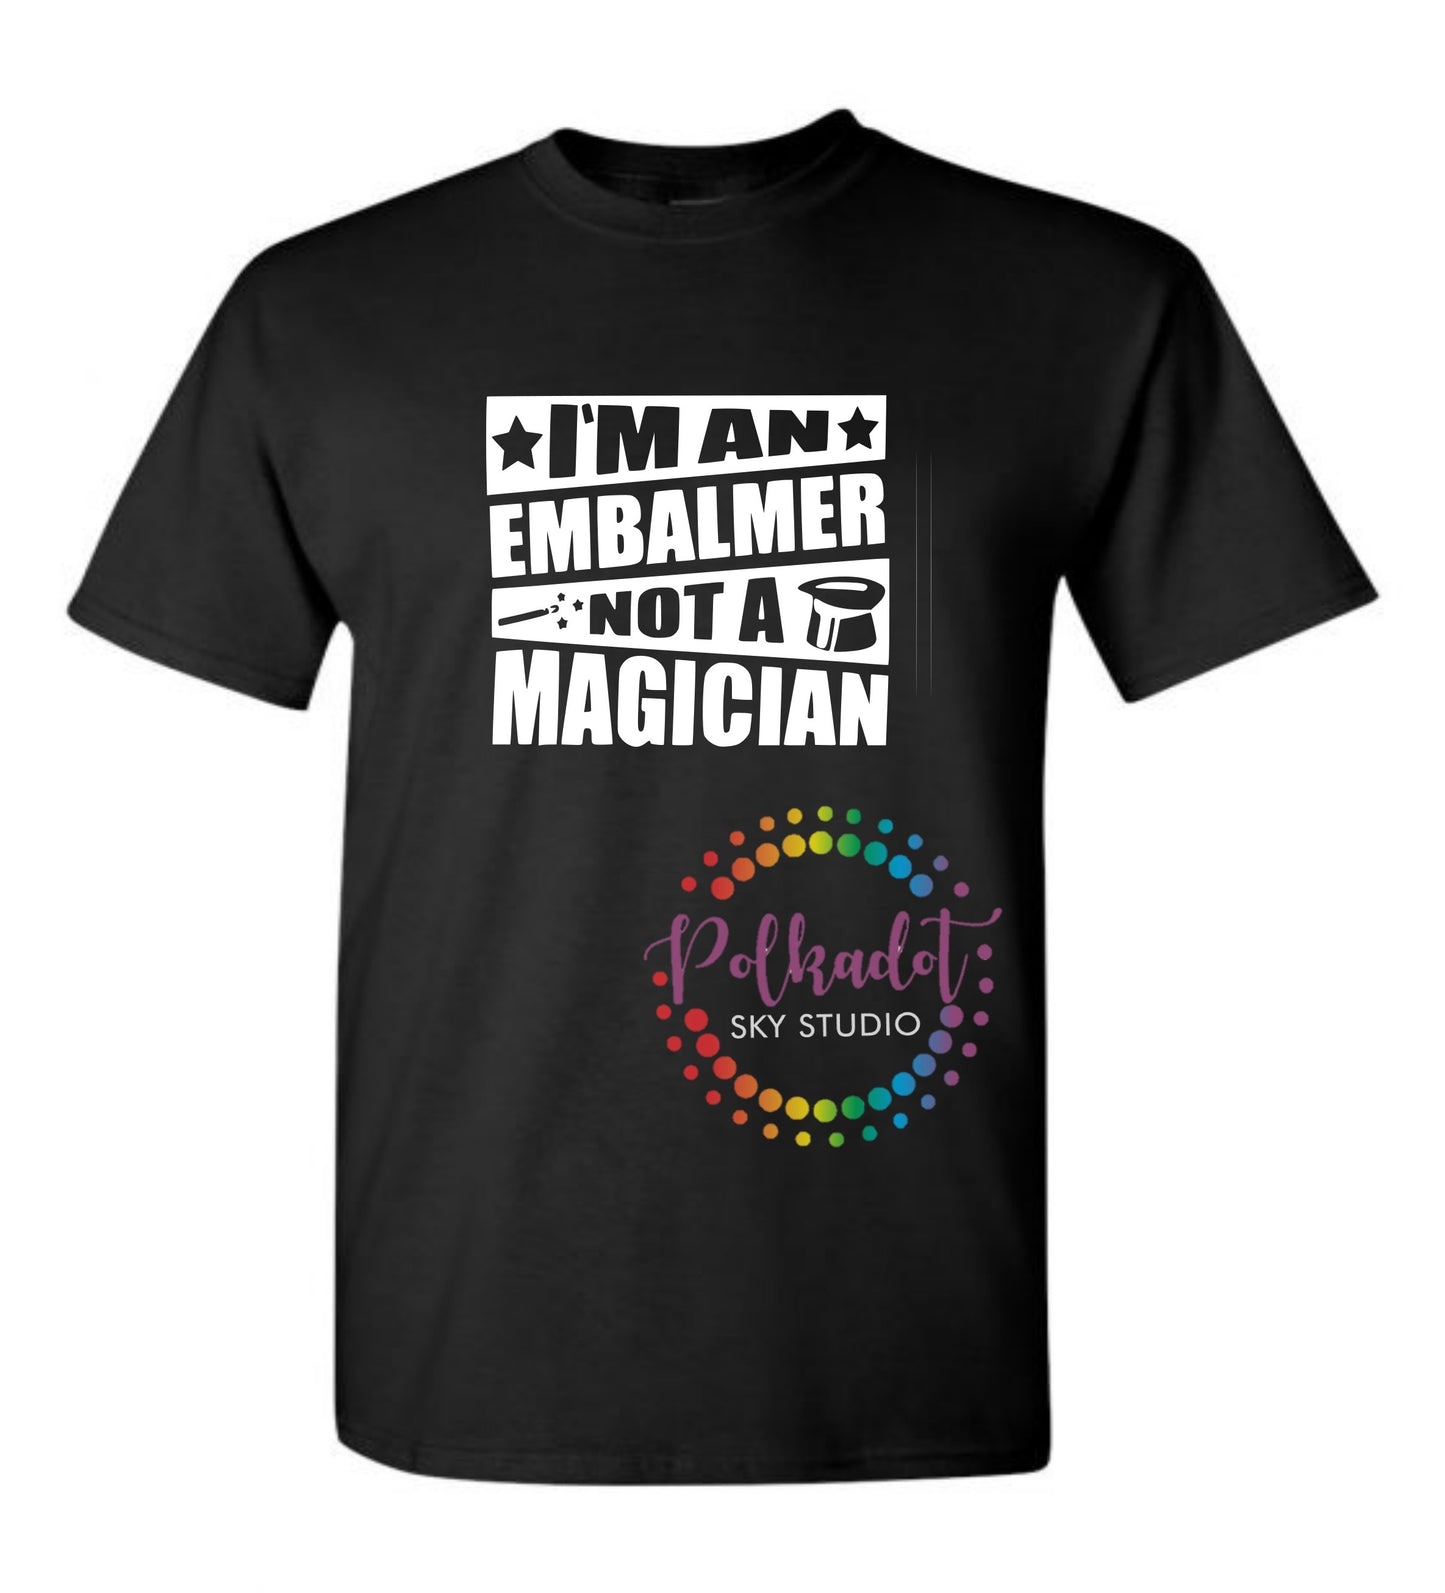 Embalmer not Magician tshirt